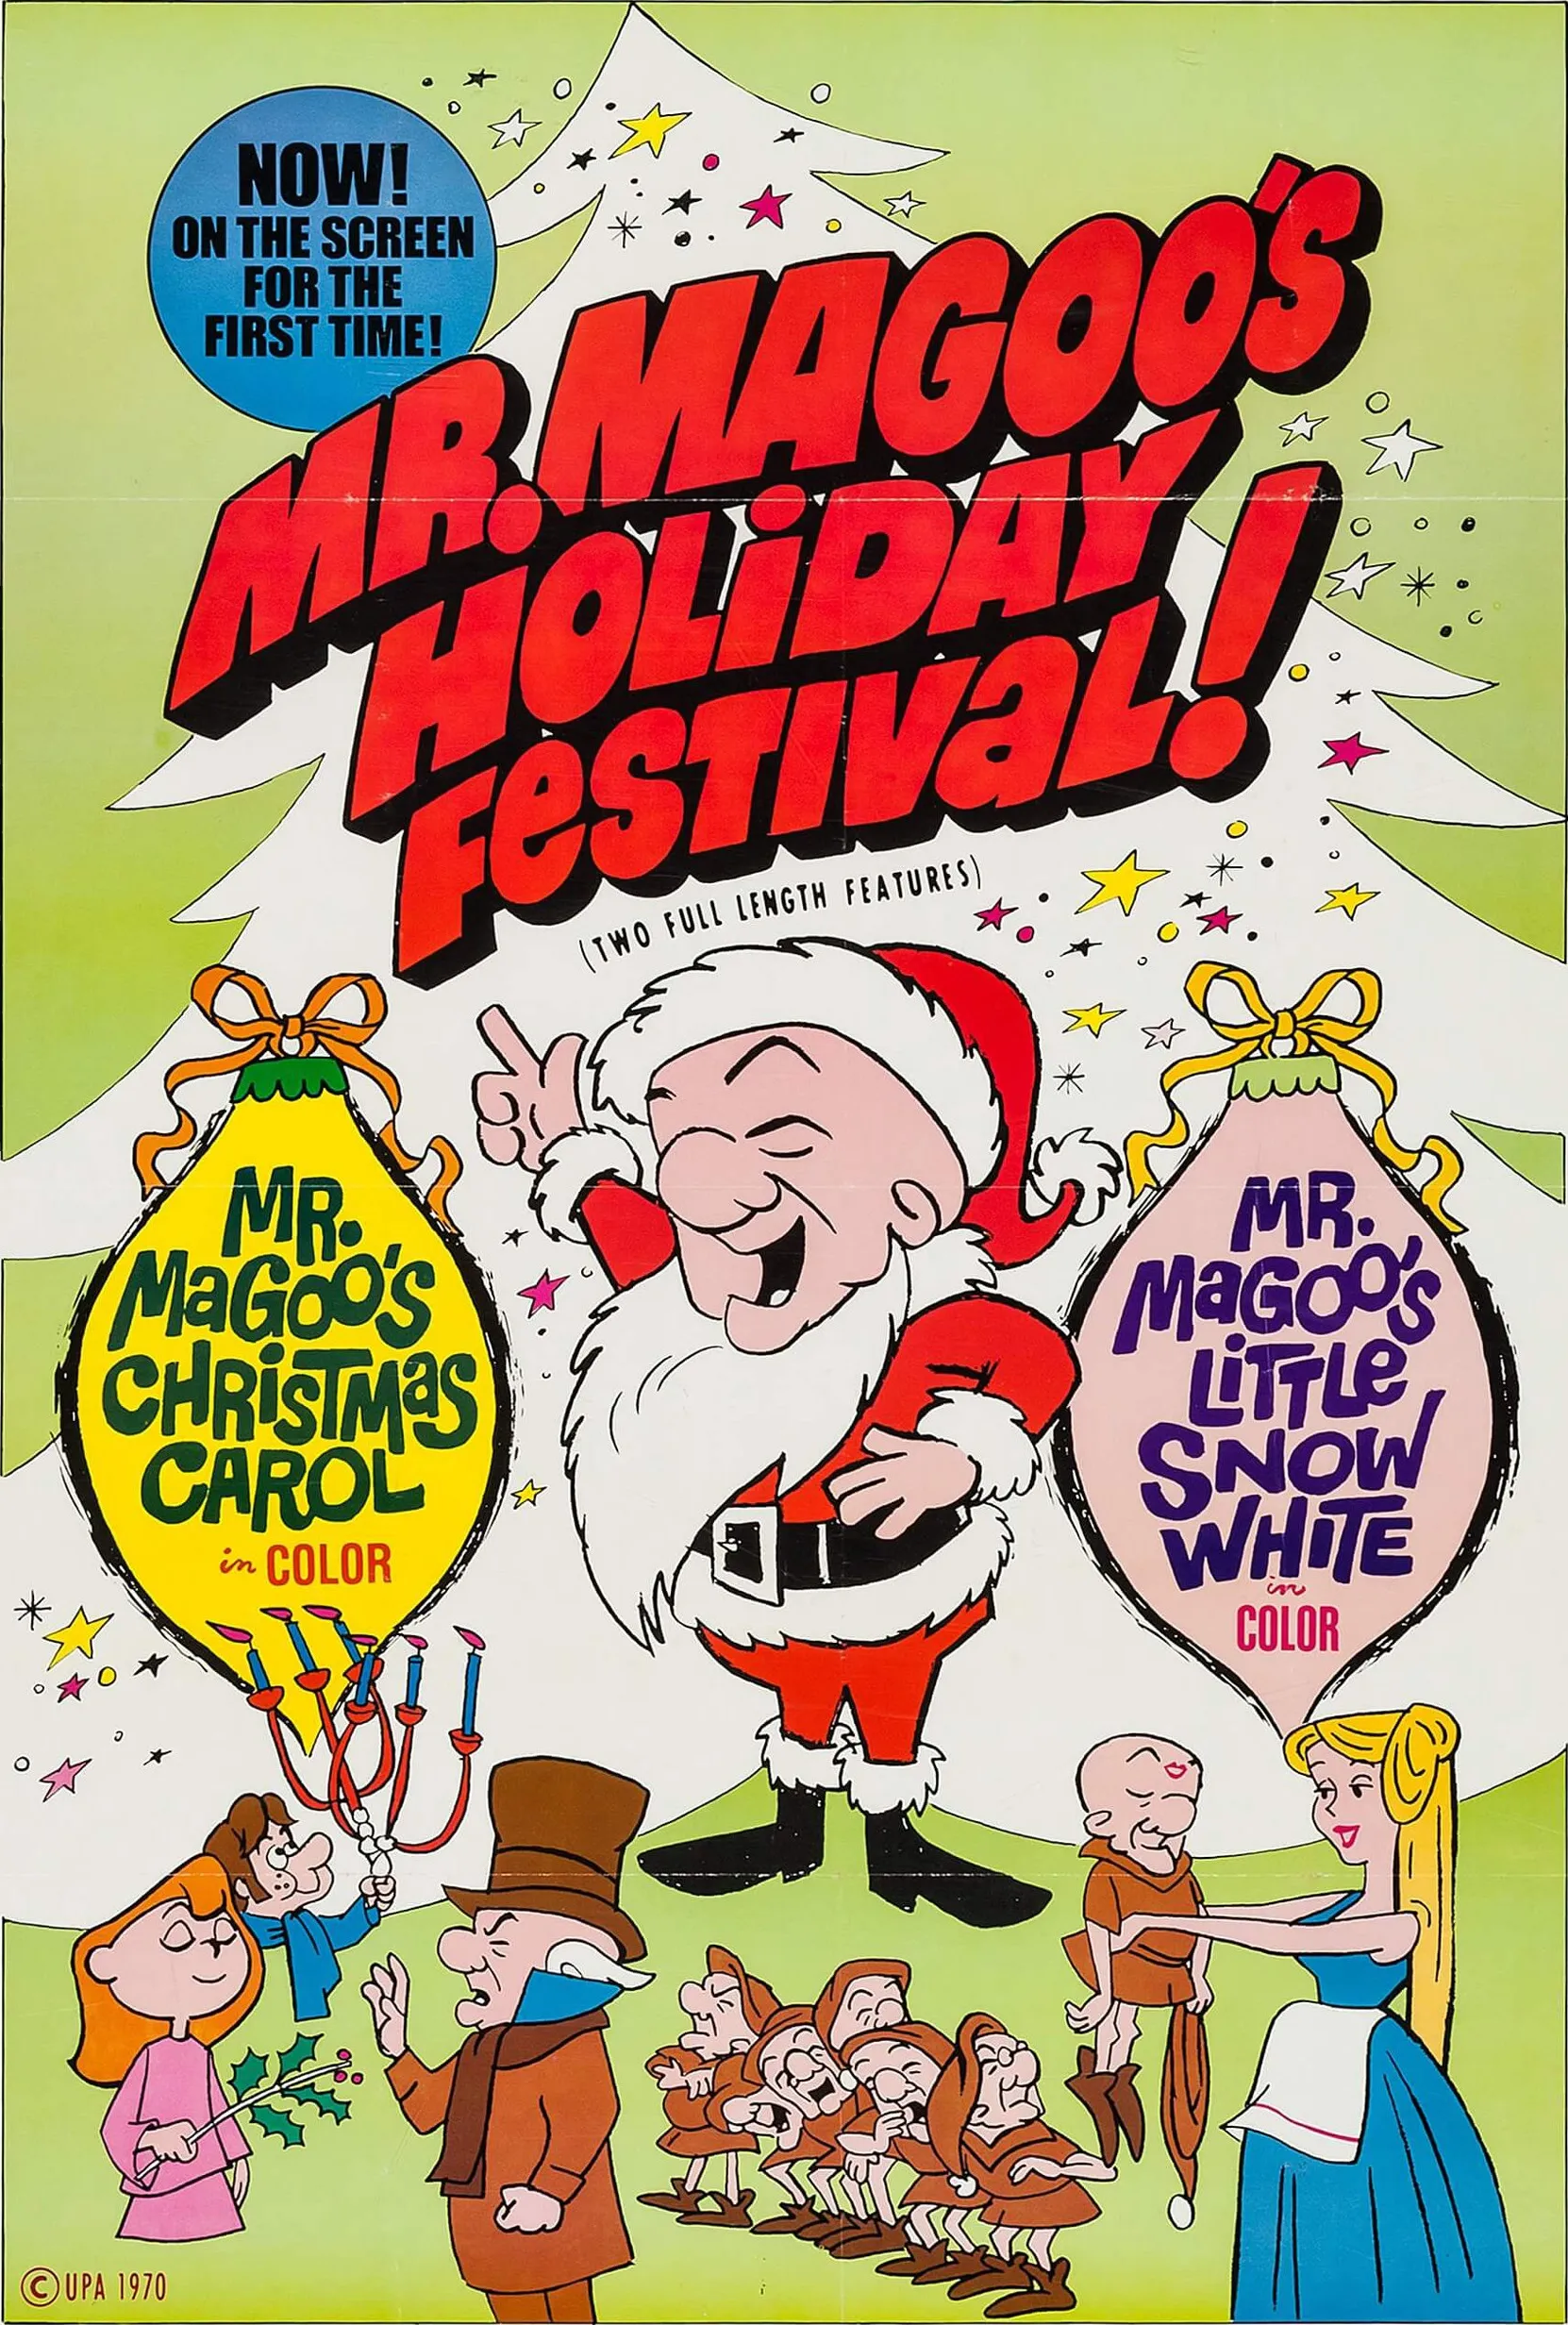 Best Christmas animated movies - A Christmas Carol